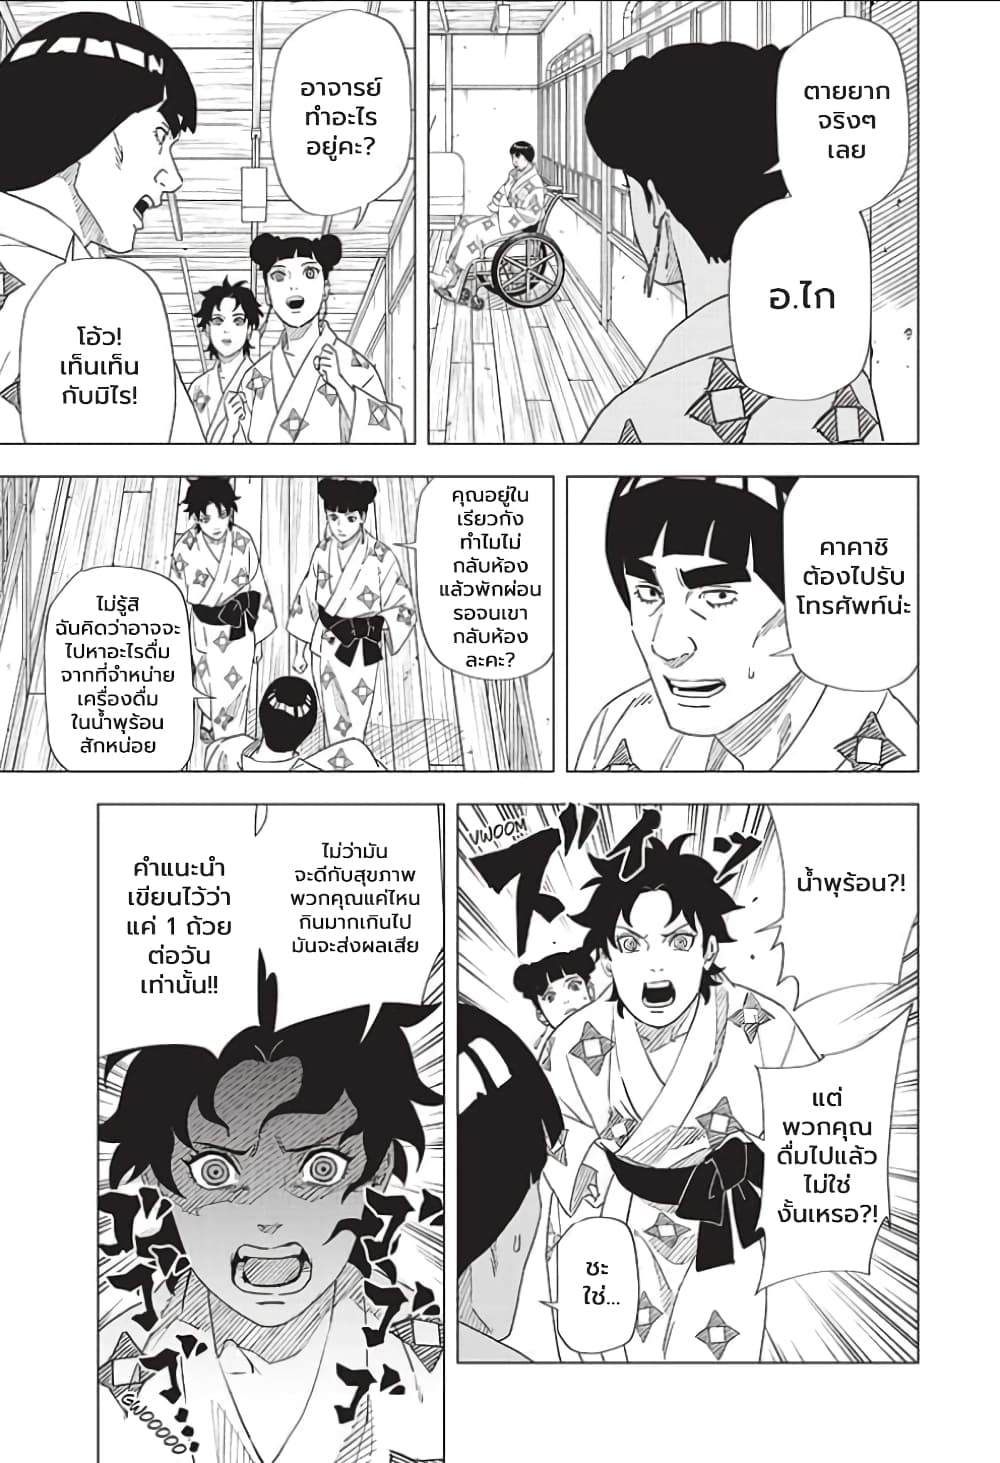 Naruto Konoha’s Story – The Steam Ninja Scrolls The Manga ตอนที่ 7 (11)